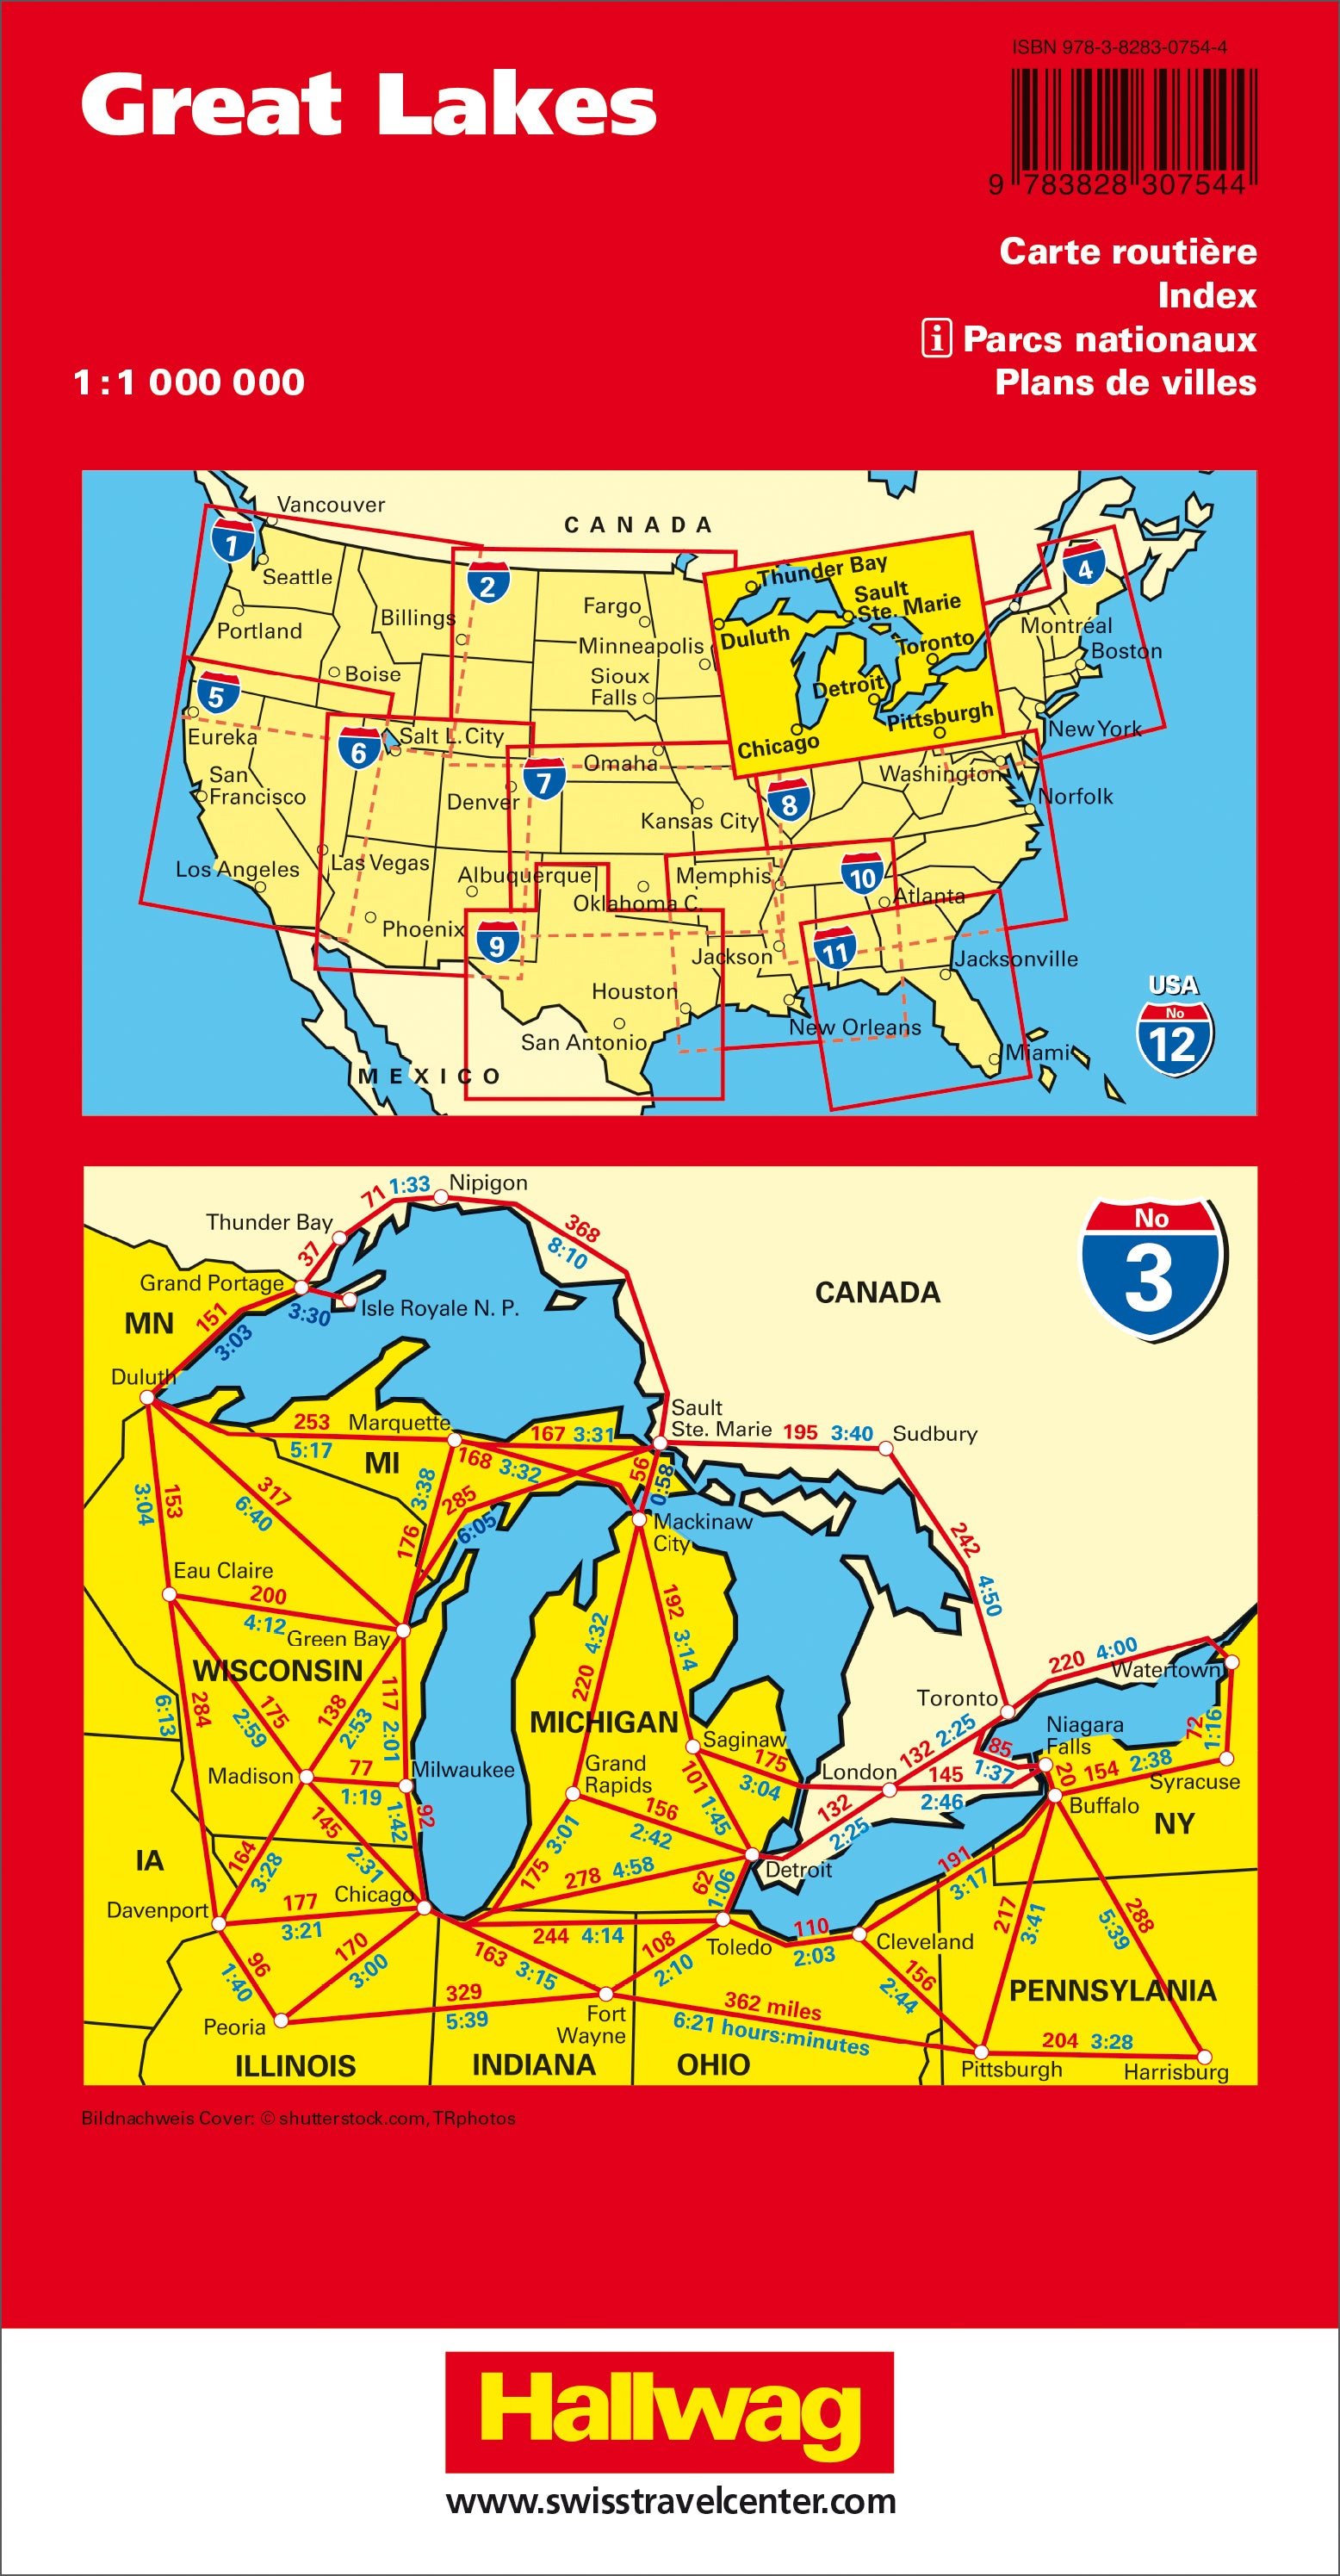 Great Lakes-03 USA Road Guide 1 : 1.000.000 - Hallwag